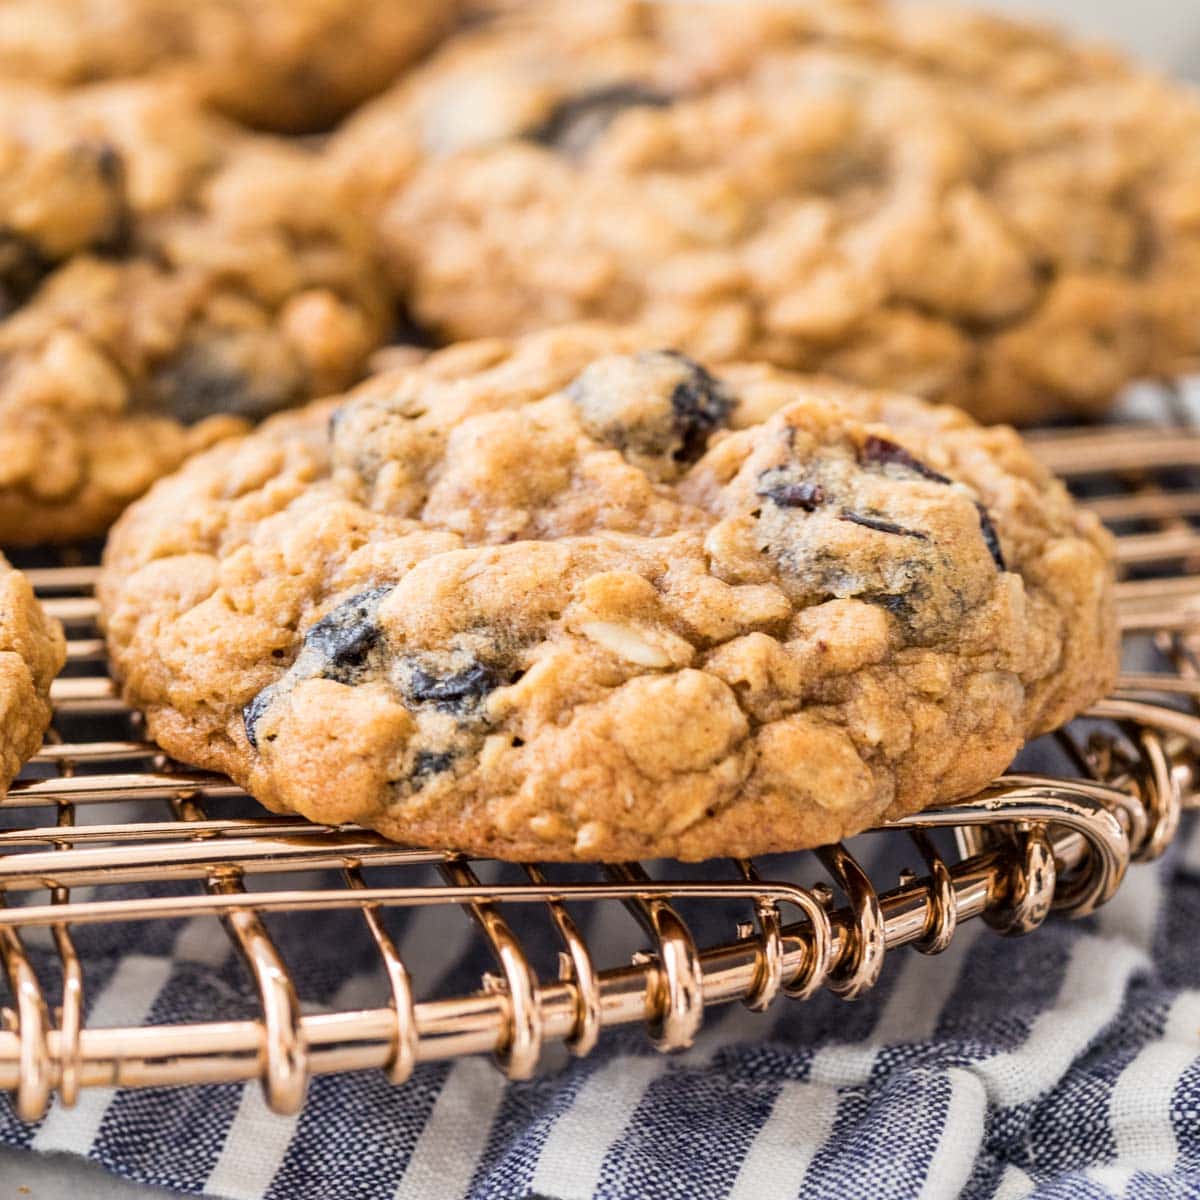 Best Brown Sugar Oatmeal Cookies Recipe - How to Make Oatmeal Cookies